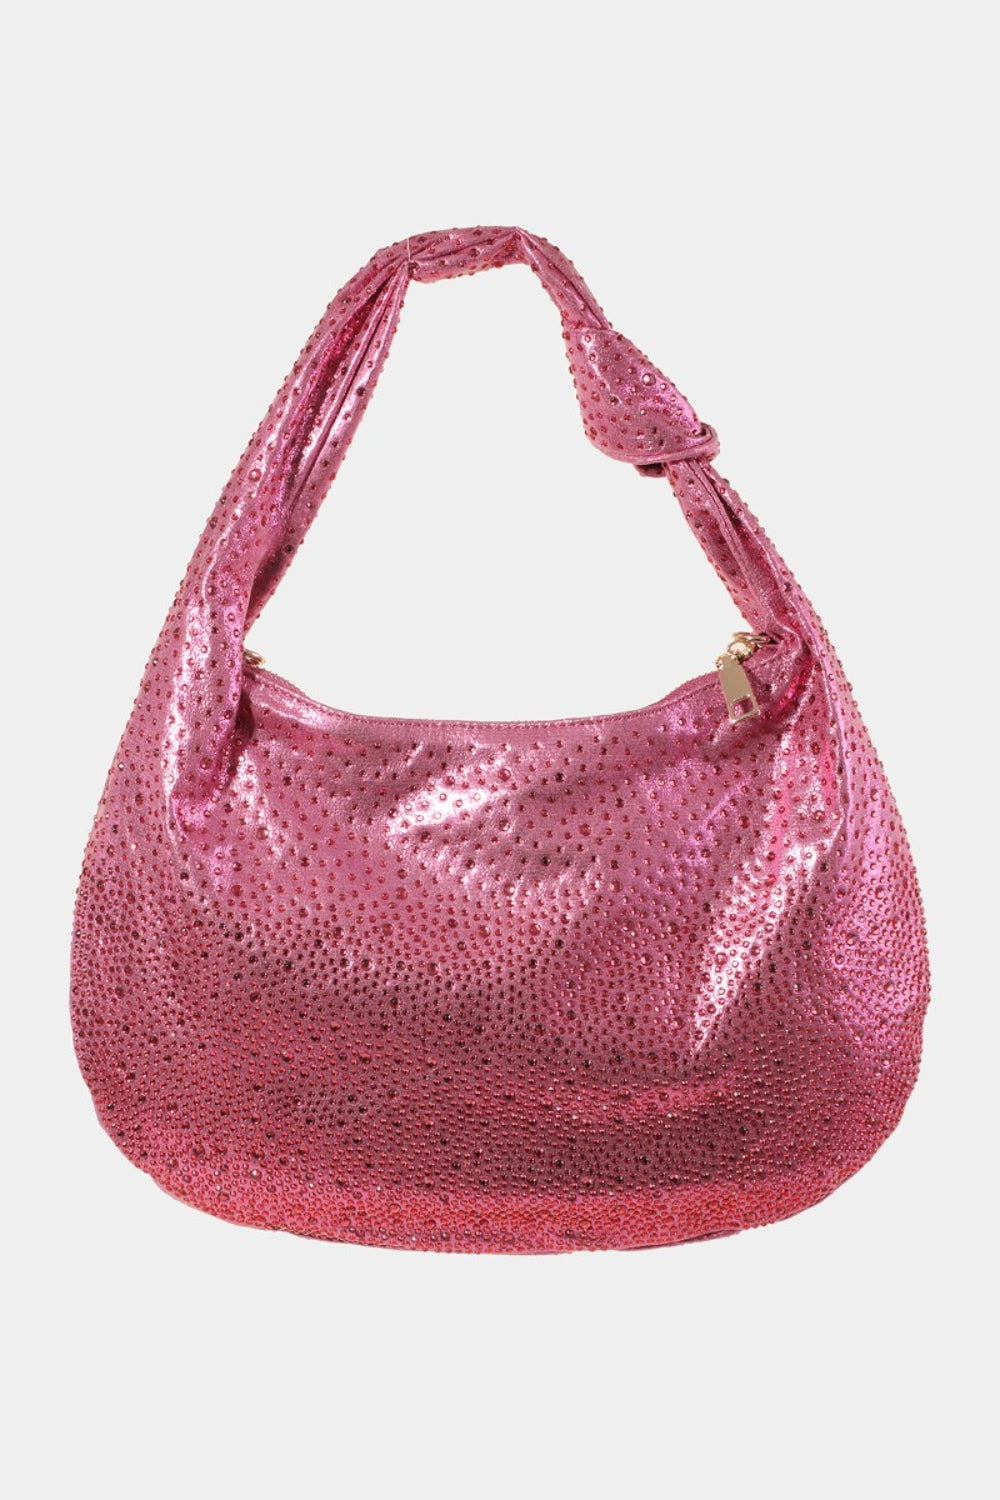 Fame Rhinestone Studded Handbag (5 Colors)